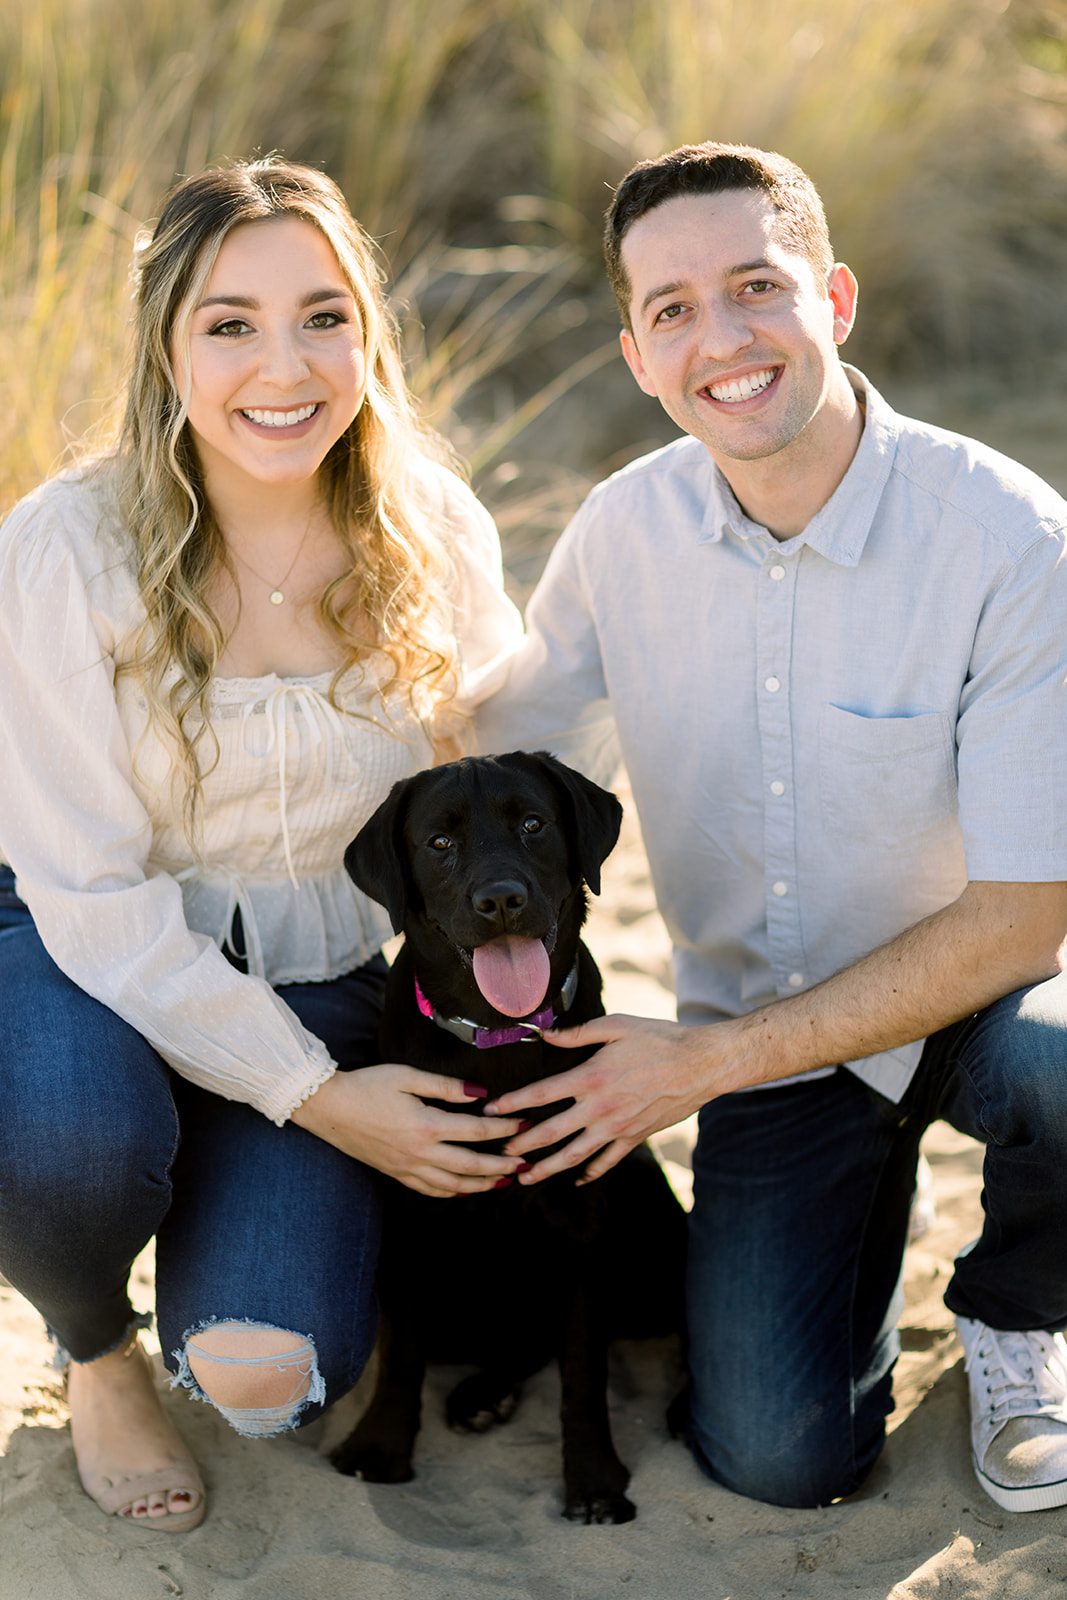 Cute engagement photos with their black labrador